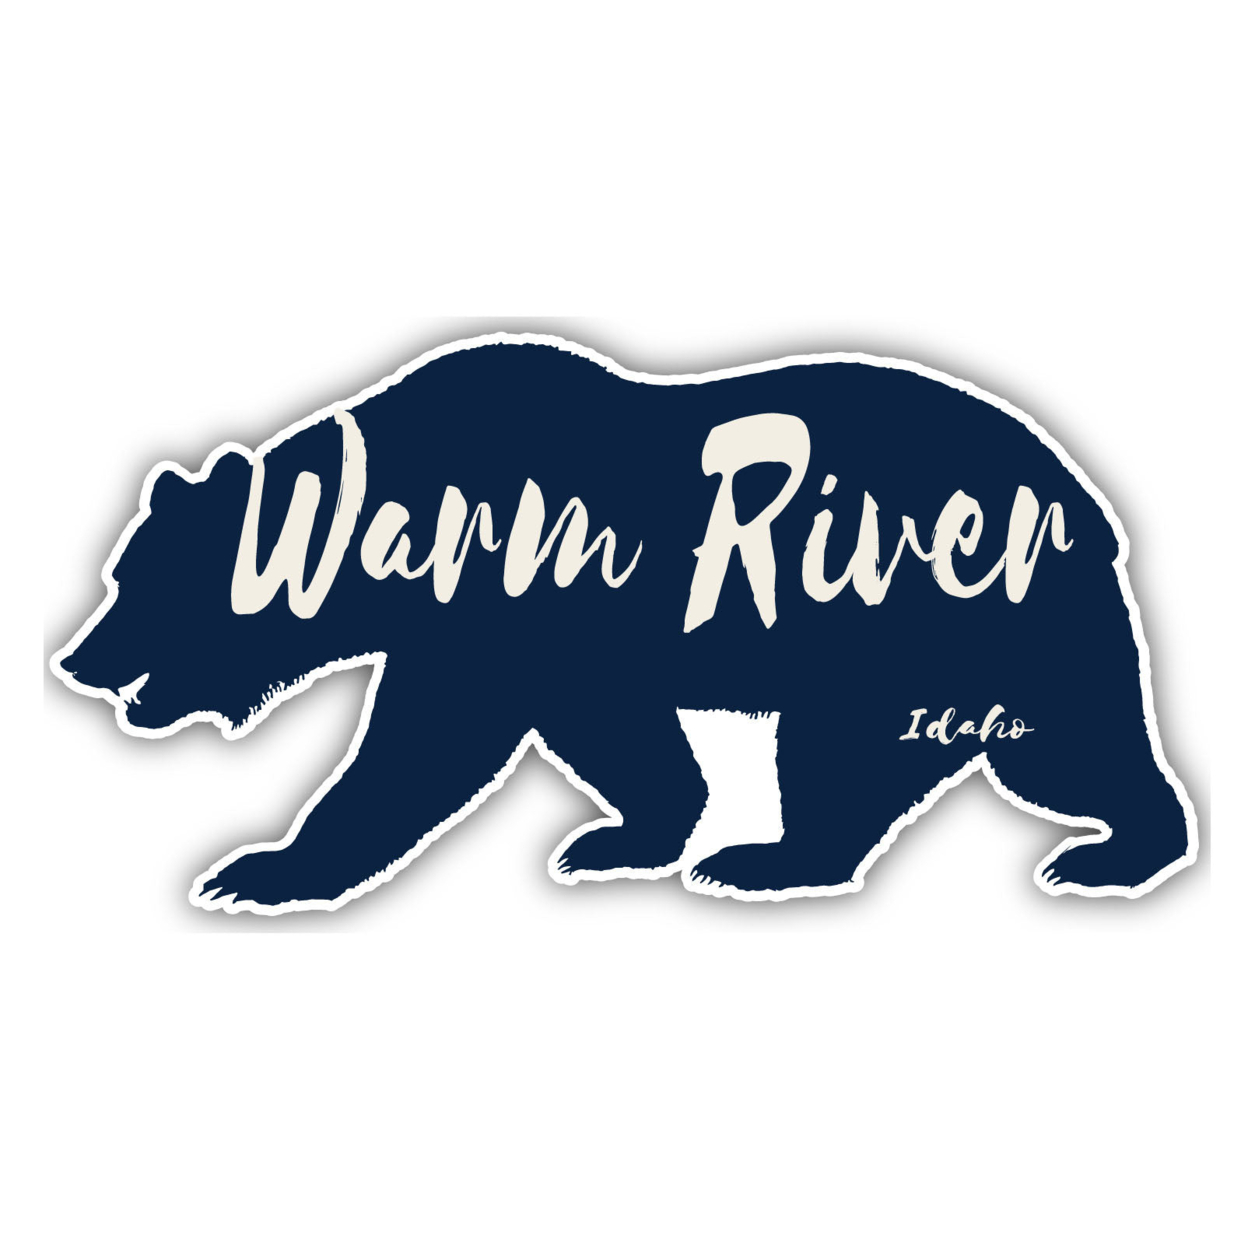 Warm River Idaho Souvenir Decorative Stickers (Choose Theme And Size) - Single Unit, 2-Inch, Bear